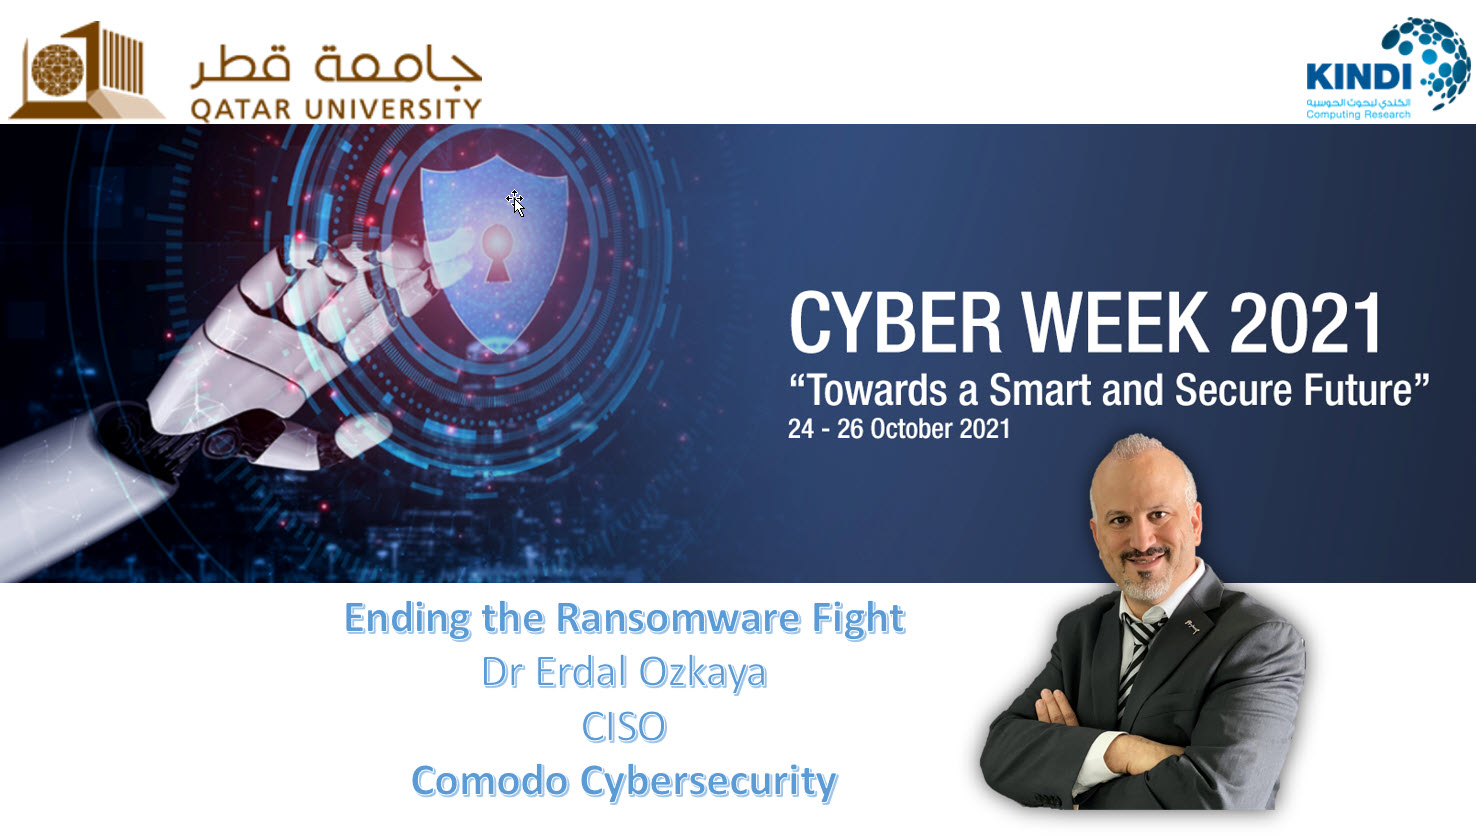 Qatar University Cyber Week